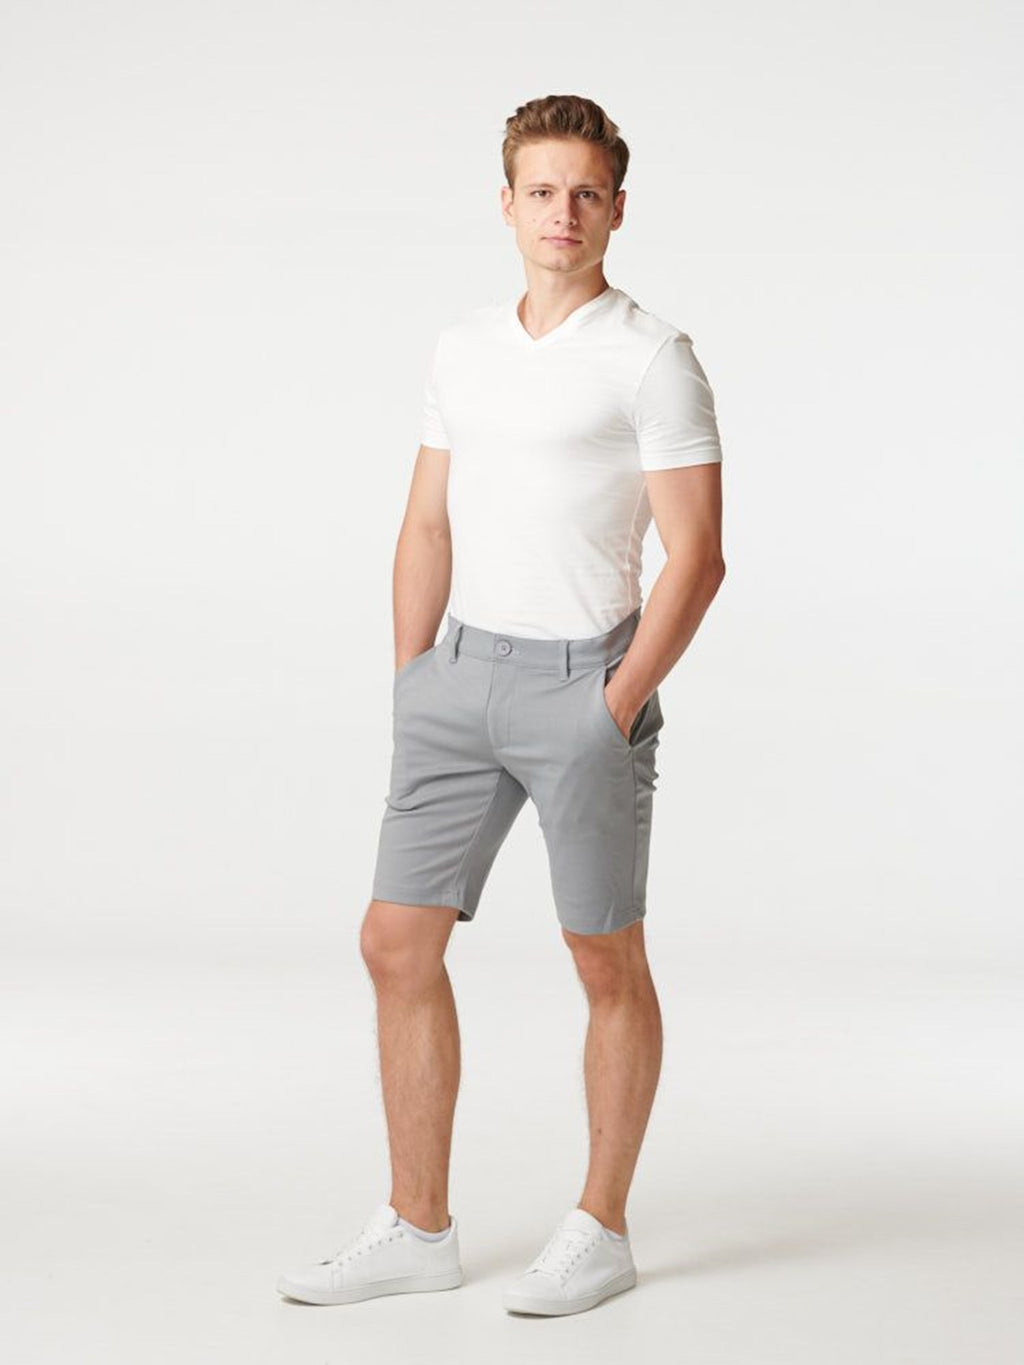 Classics Shorts - Light grey